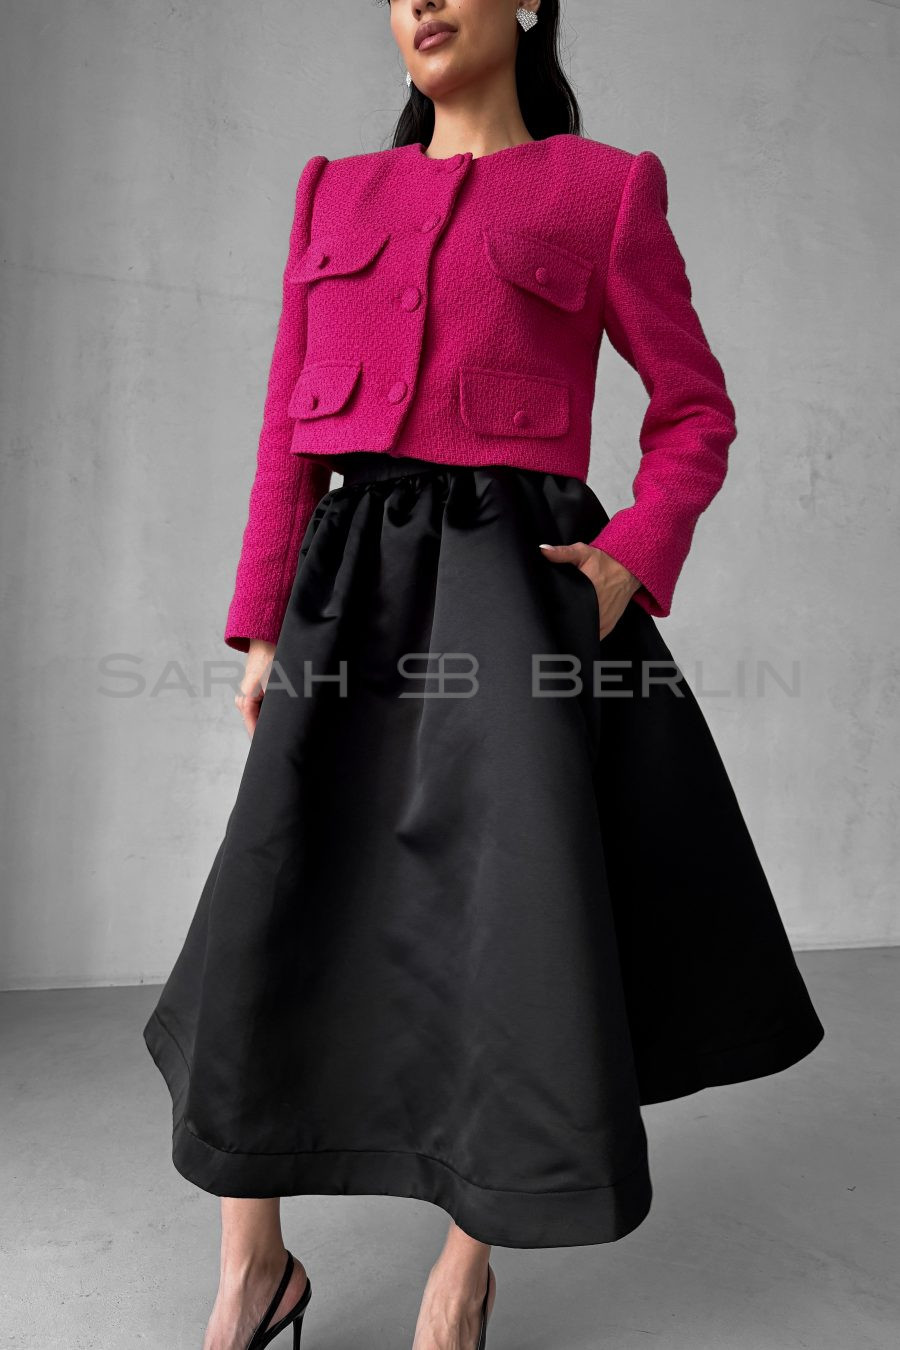 Full midi skirt with high waist